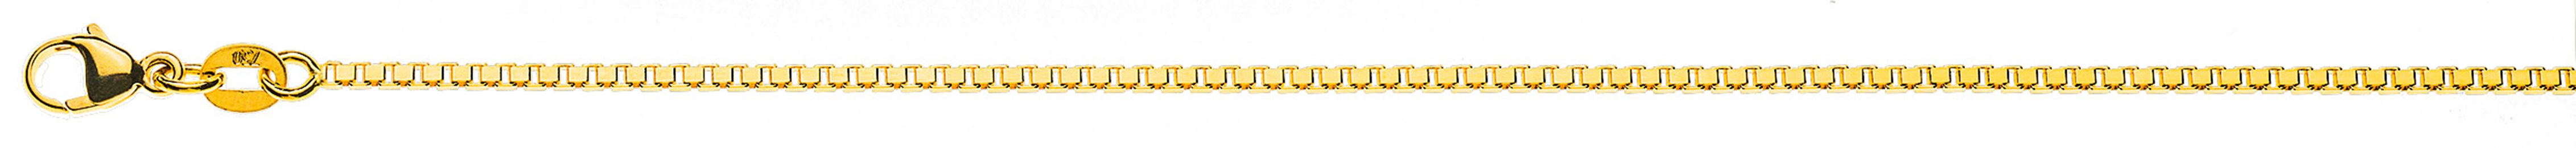 AURONOS Prestige Necklace yellow gold 18K Venetian chain diamond 45cm 1.4mm